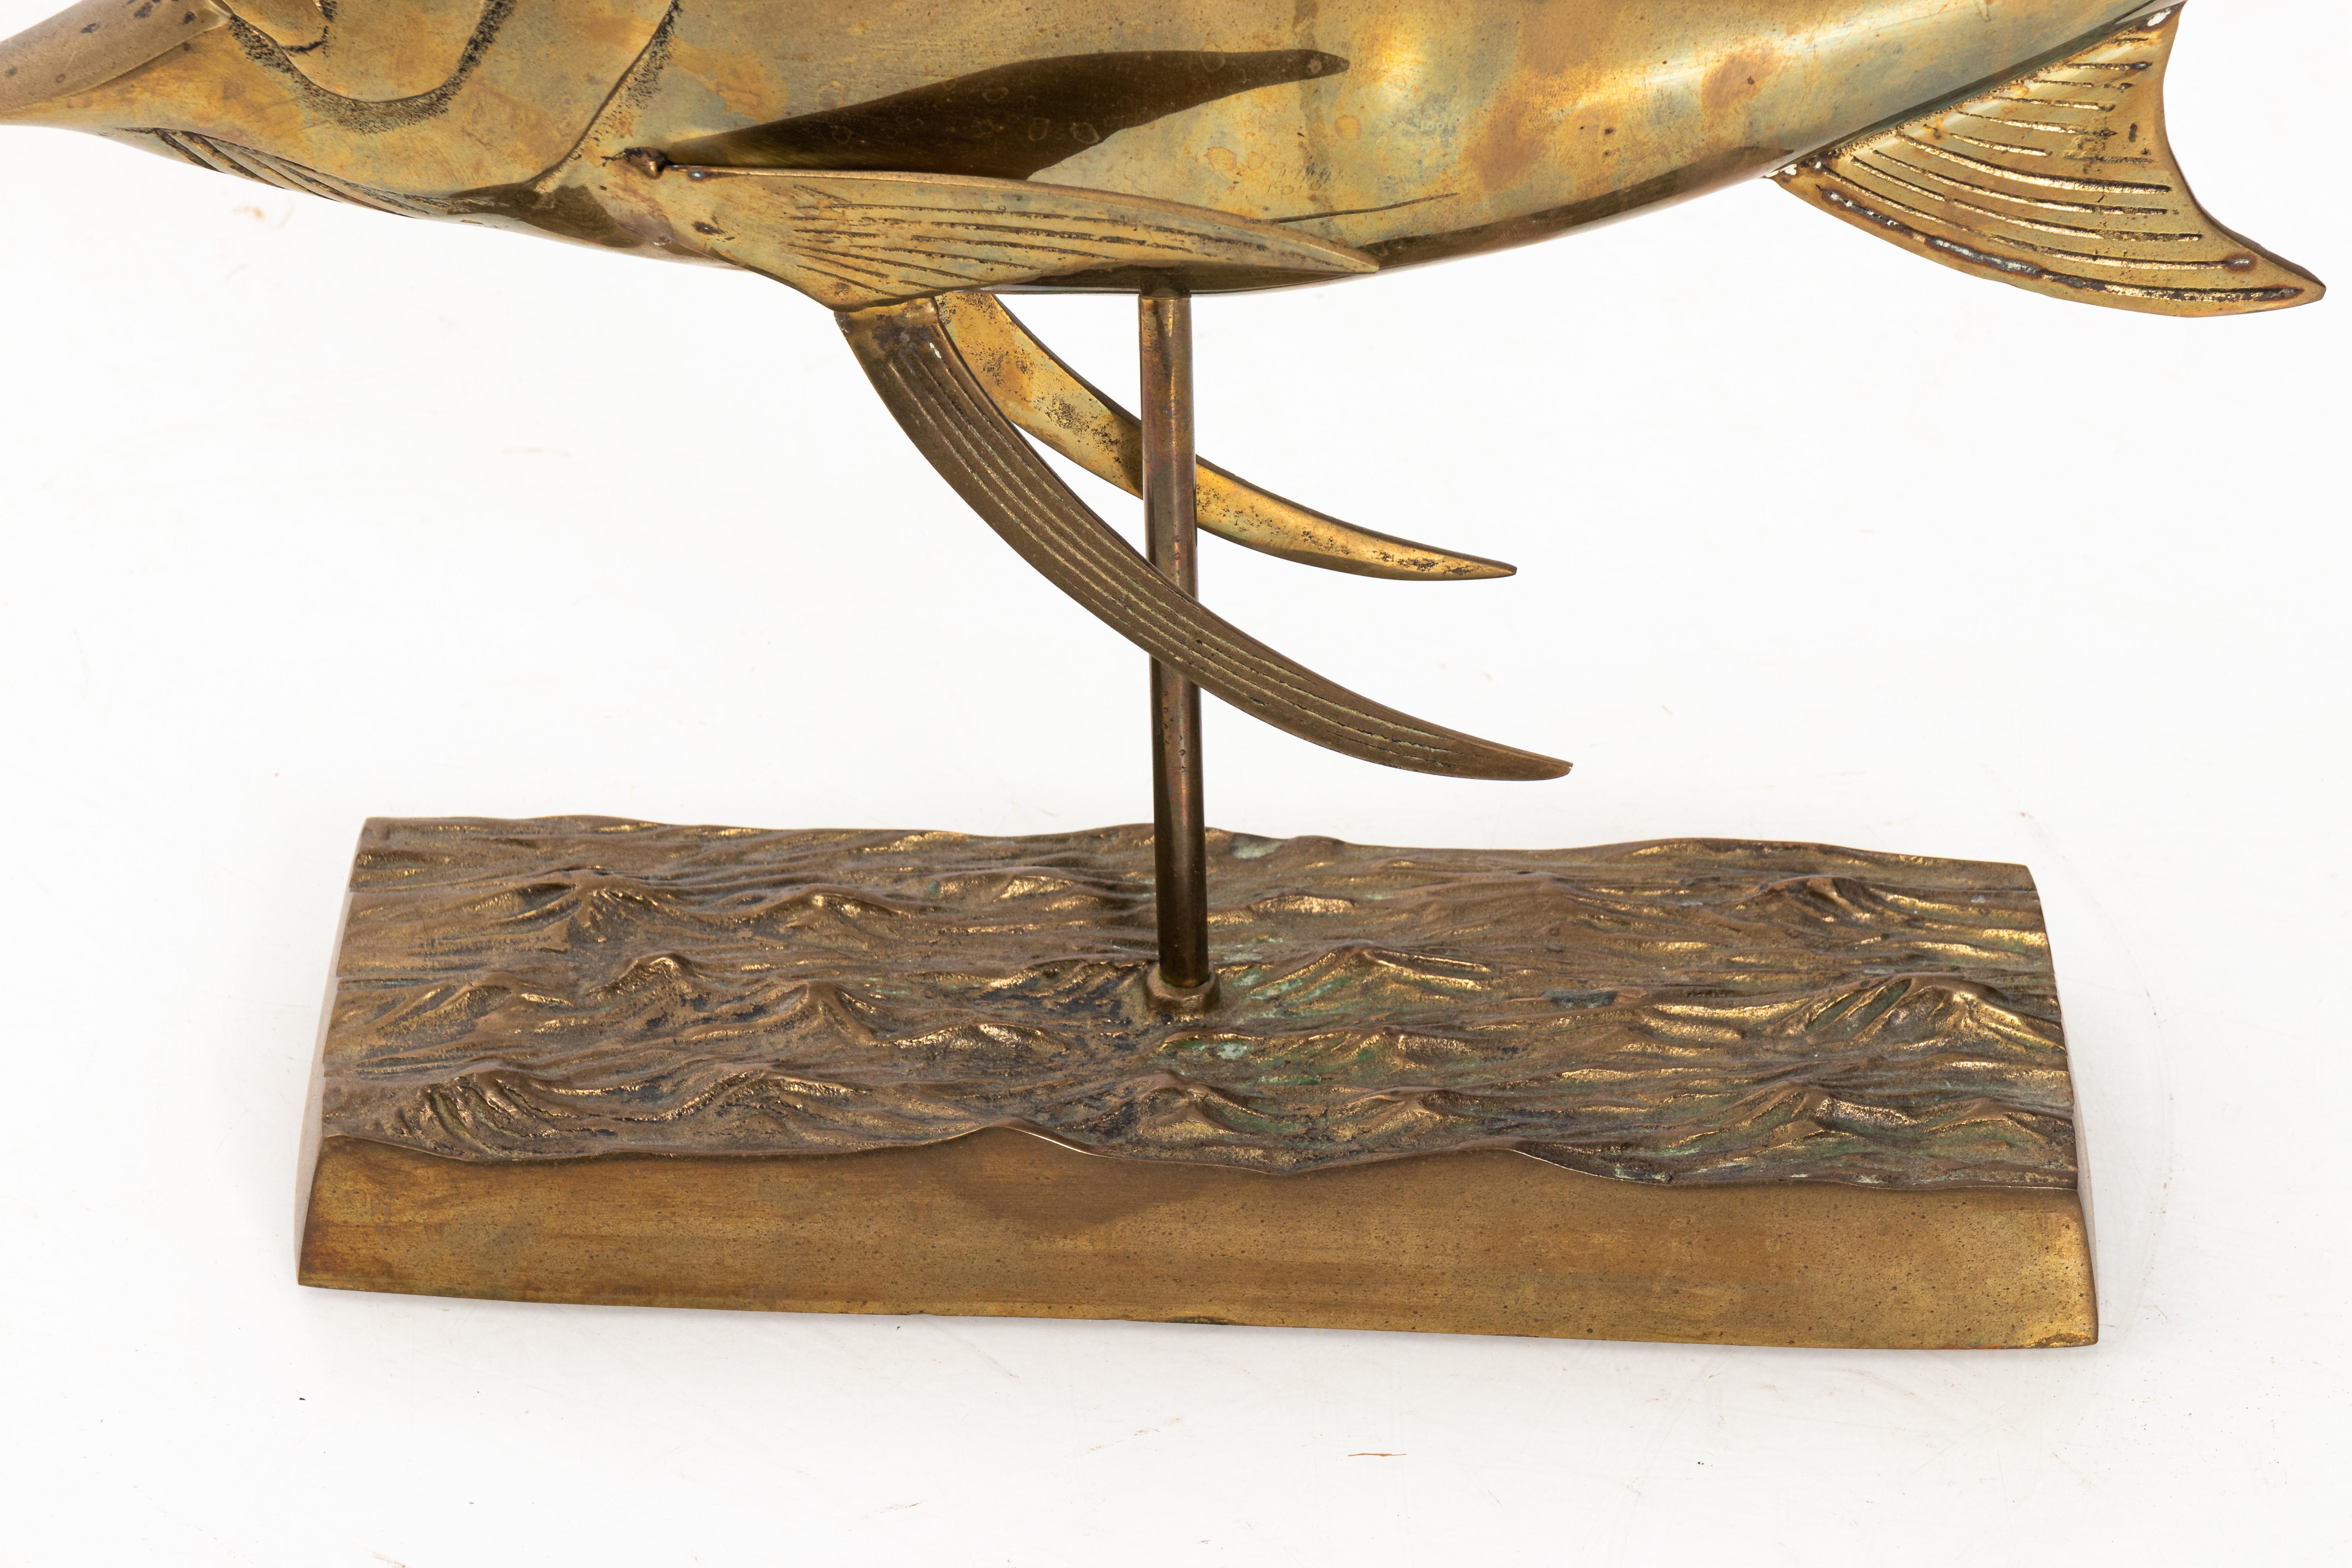 American Sail Fish Sculpture in Brass